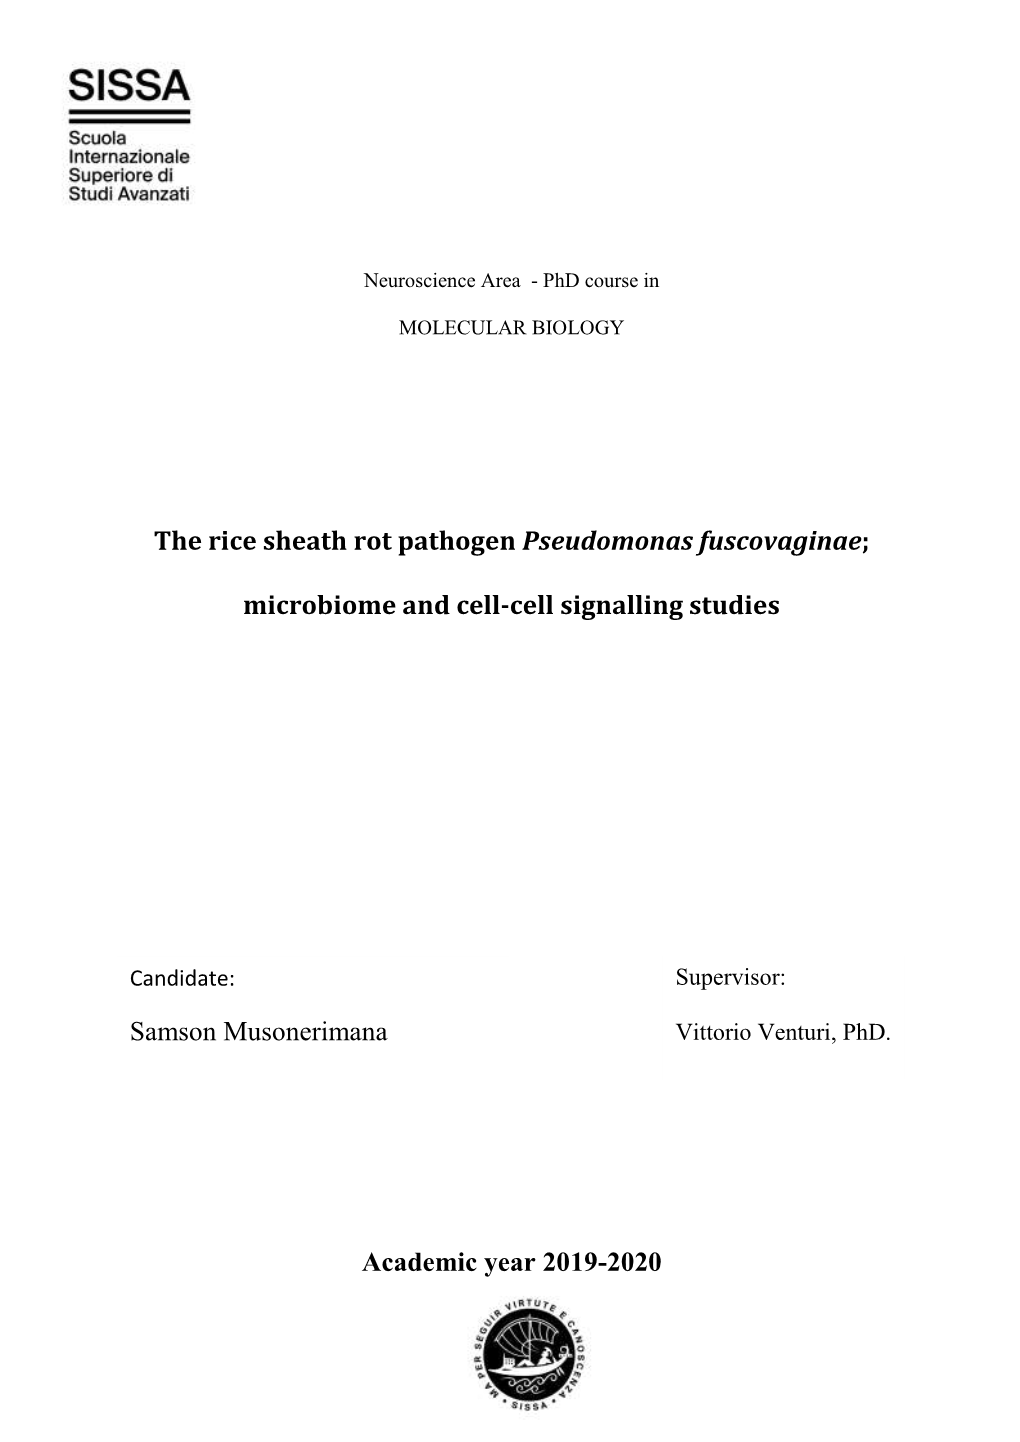 The Rice Sheath Rot Pathogen Pseudomonas Fuscovaginae;